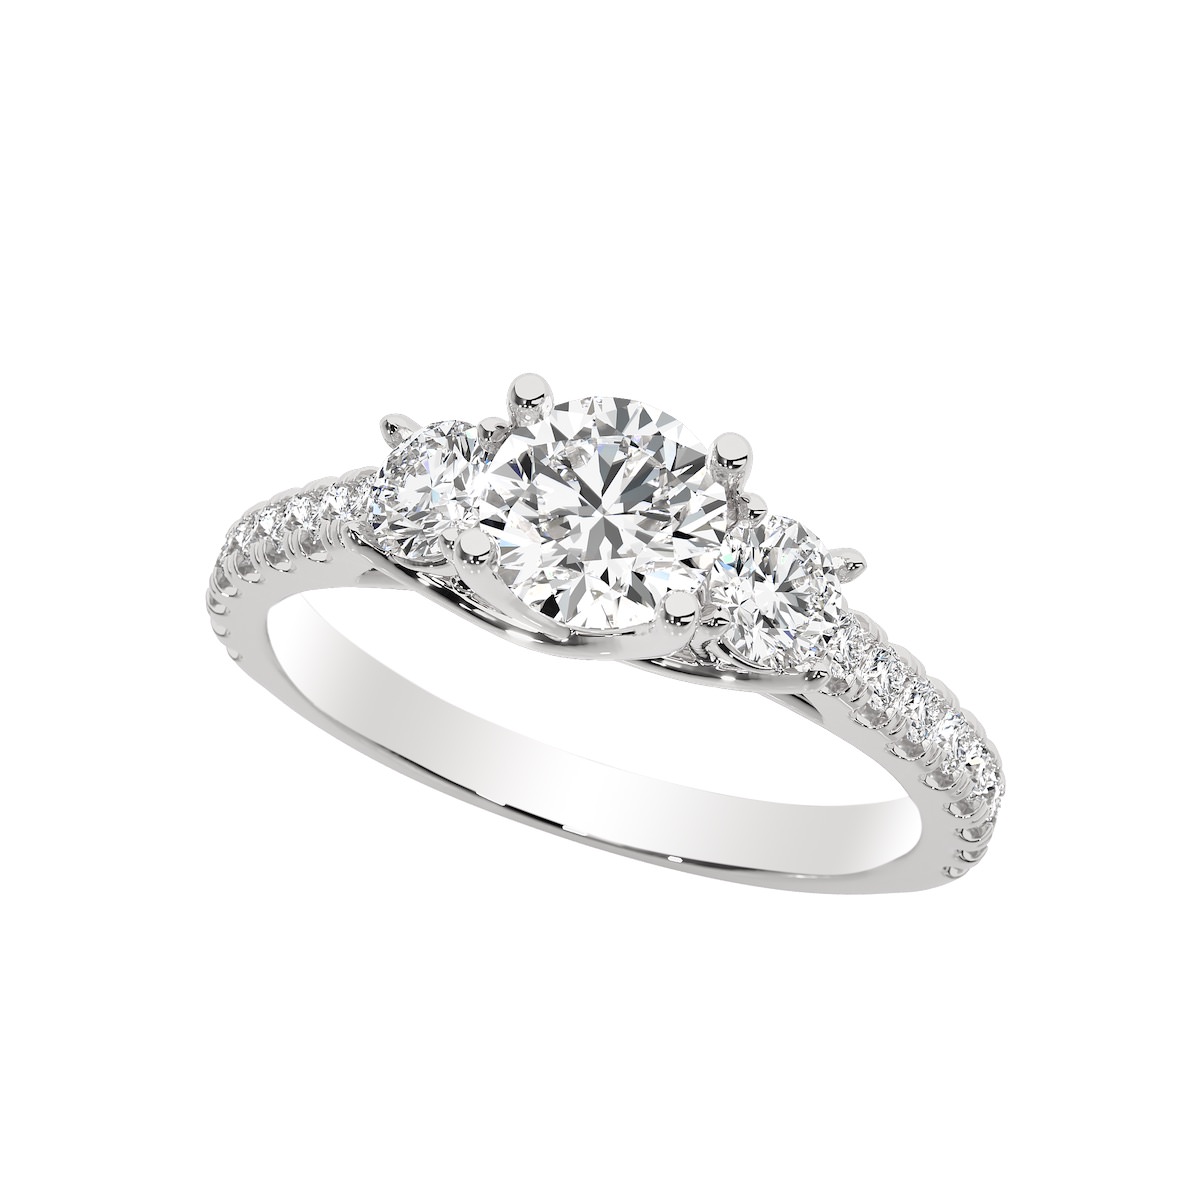 Lab Grown Diamond Engagement Ring by LovBe - White Gold Vintage Three Stone